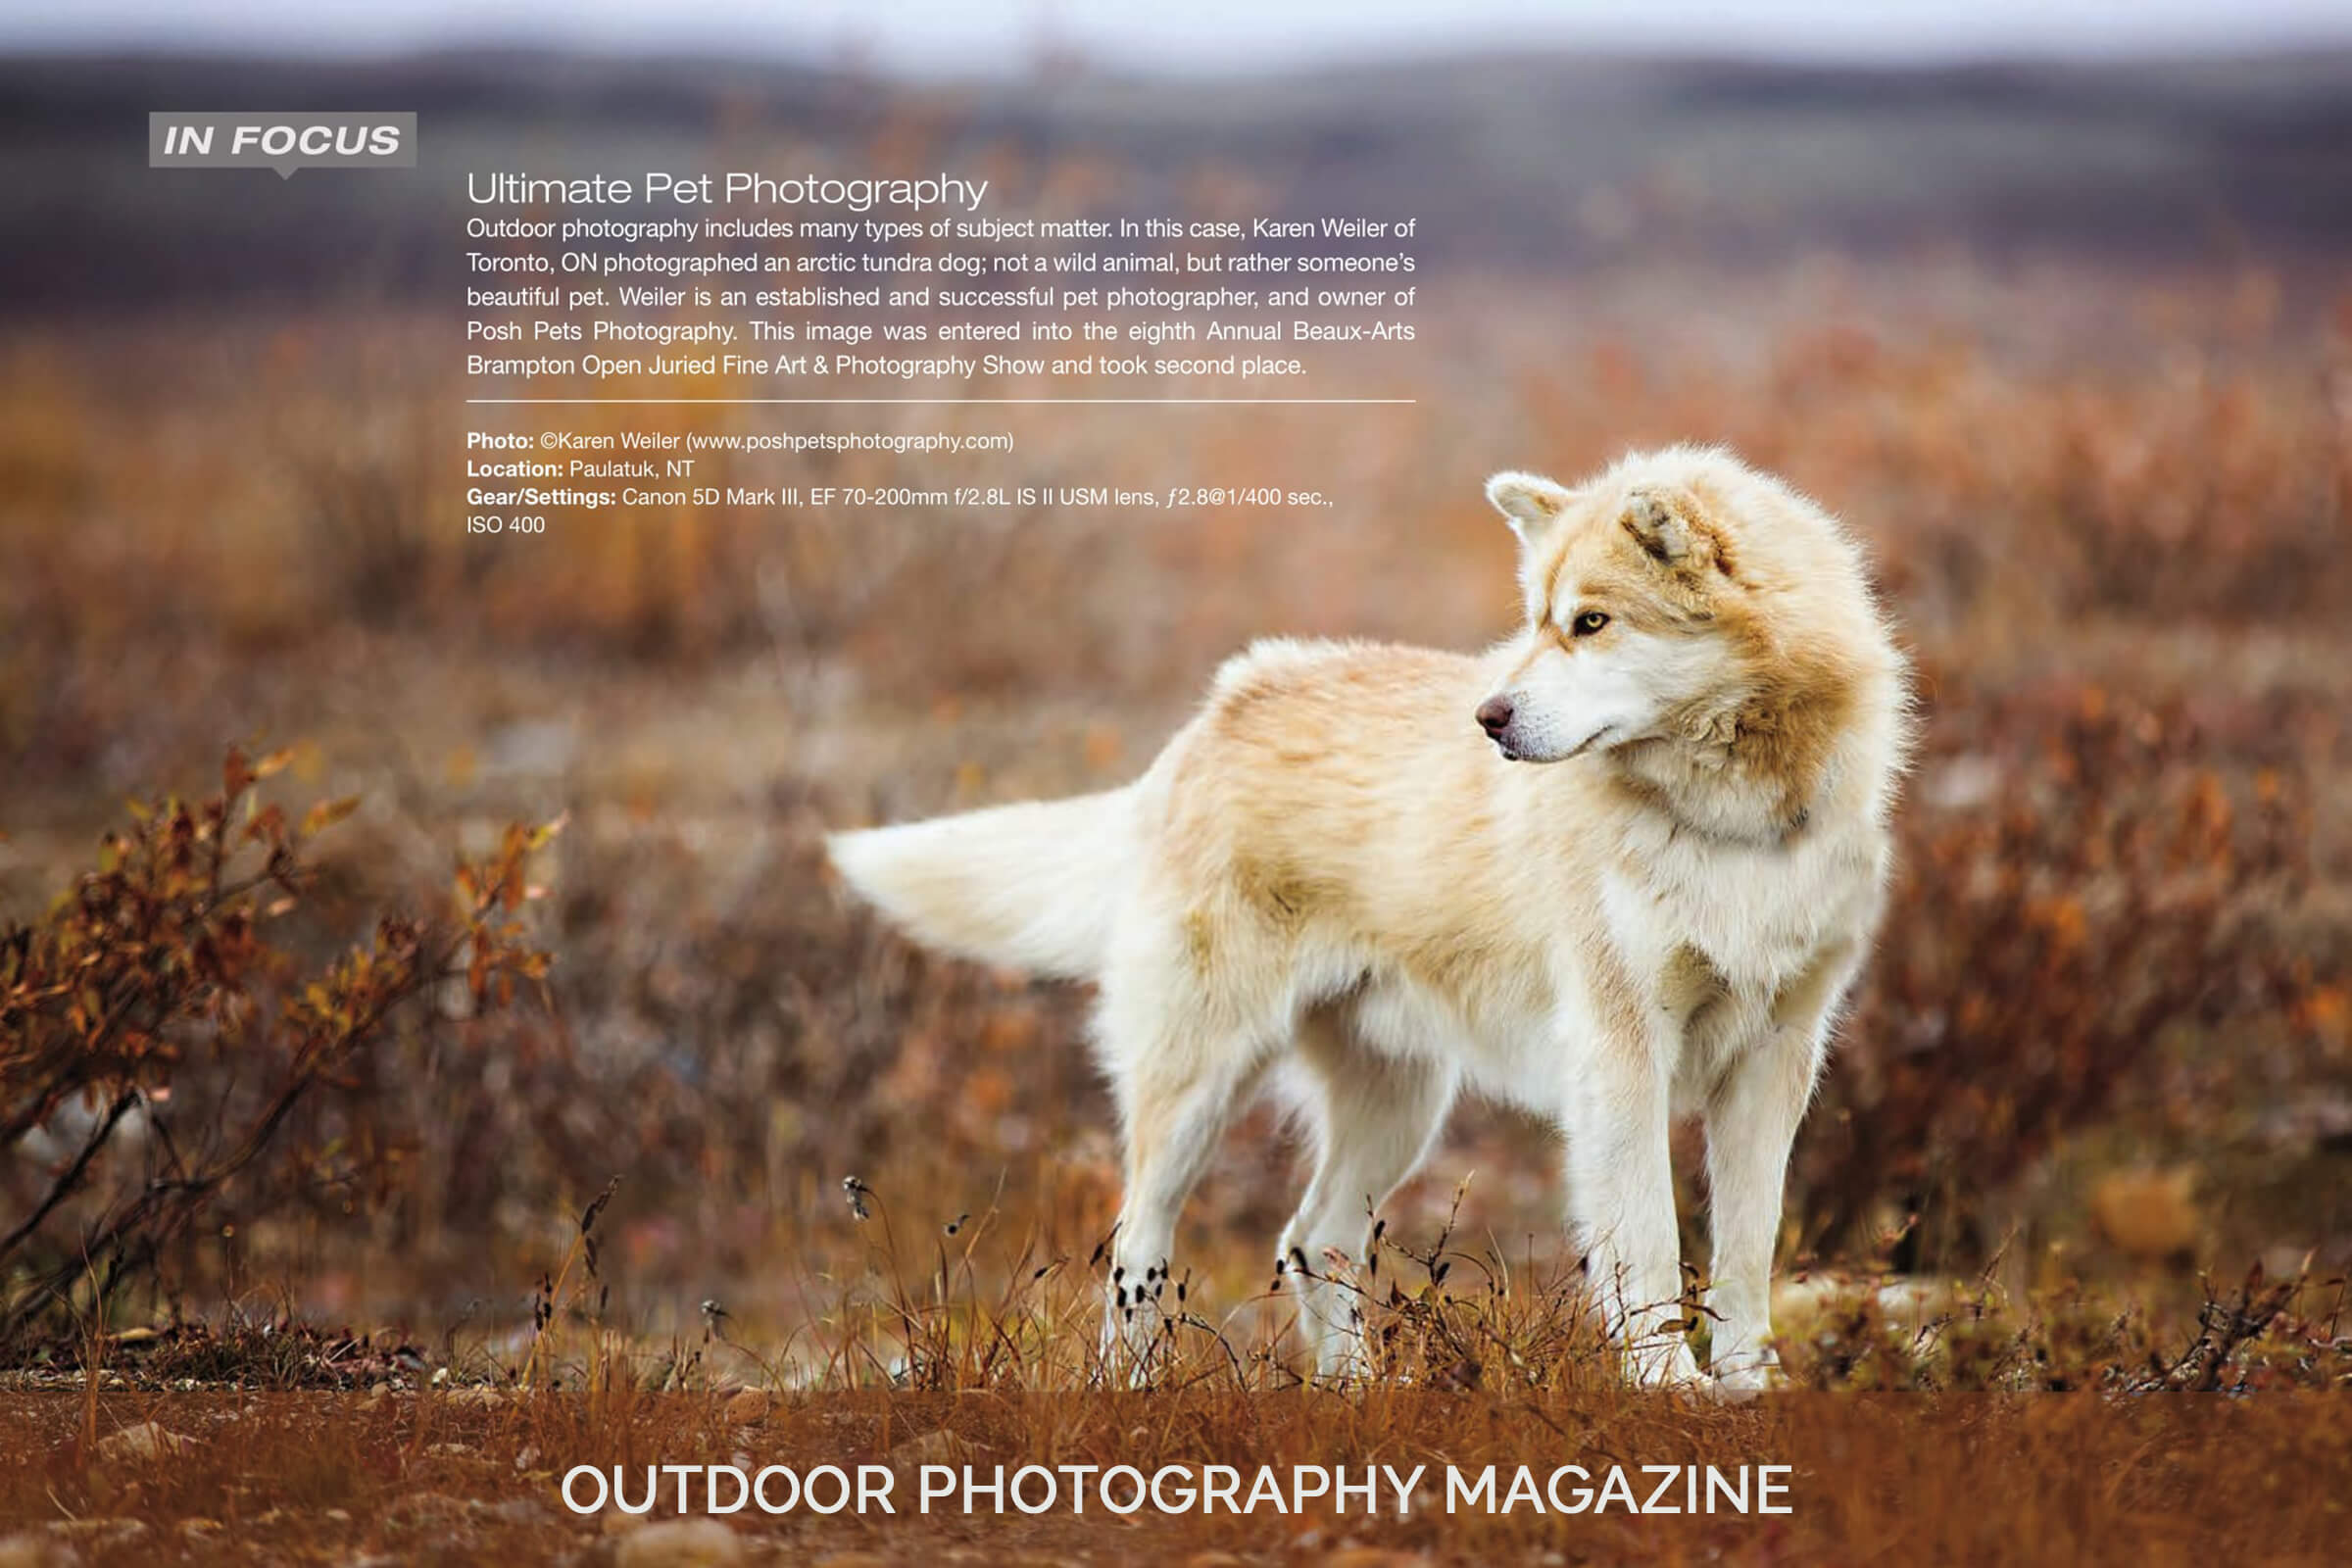 Outdoor Magazine feature by Karen Weiler